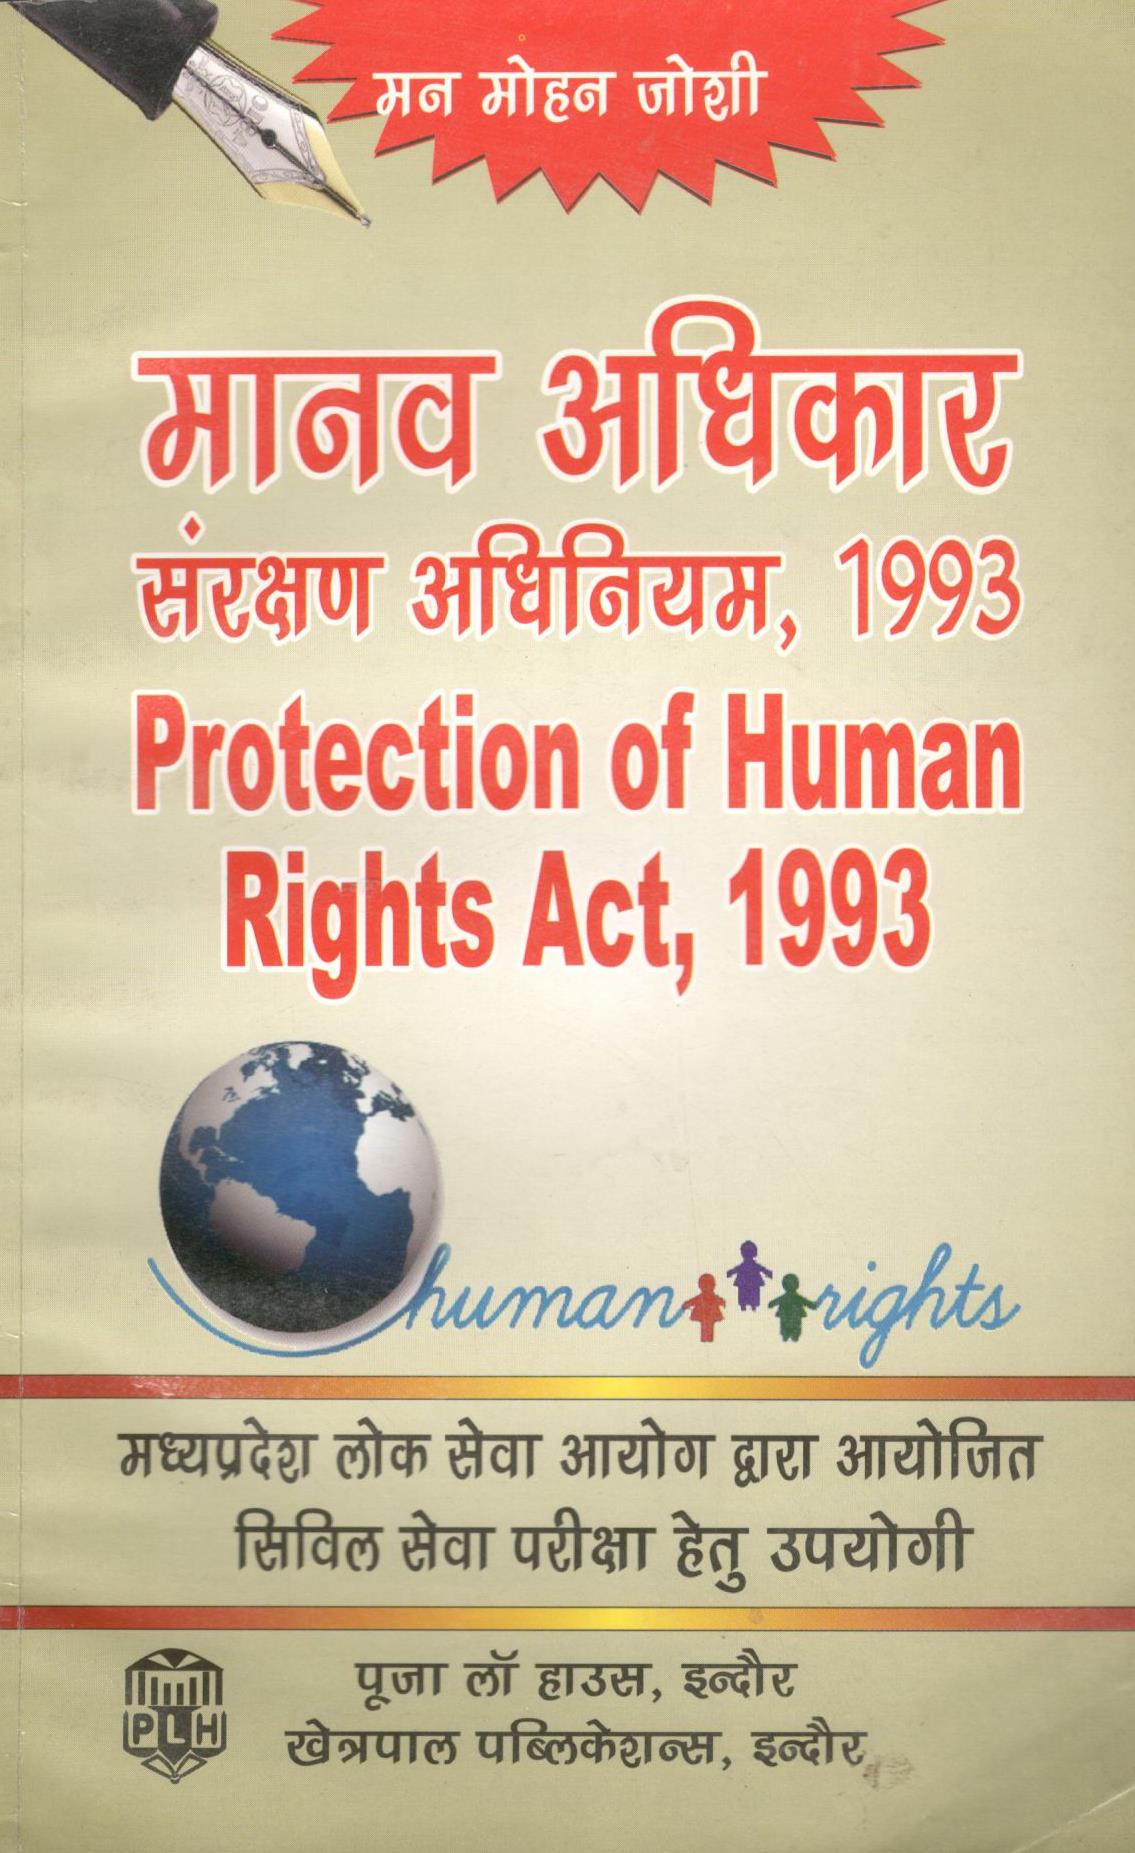 मनमोहन जोशी – मानव अधिकार संरक्षण अधिनियम, 1993 / Protection of Human Rights Act, 1993 (मध्य प्रदेश लोक सेवा आयोग द्वारा आयोजित सिविल सेवा परीक्षा हेतु उपयोगी)